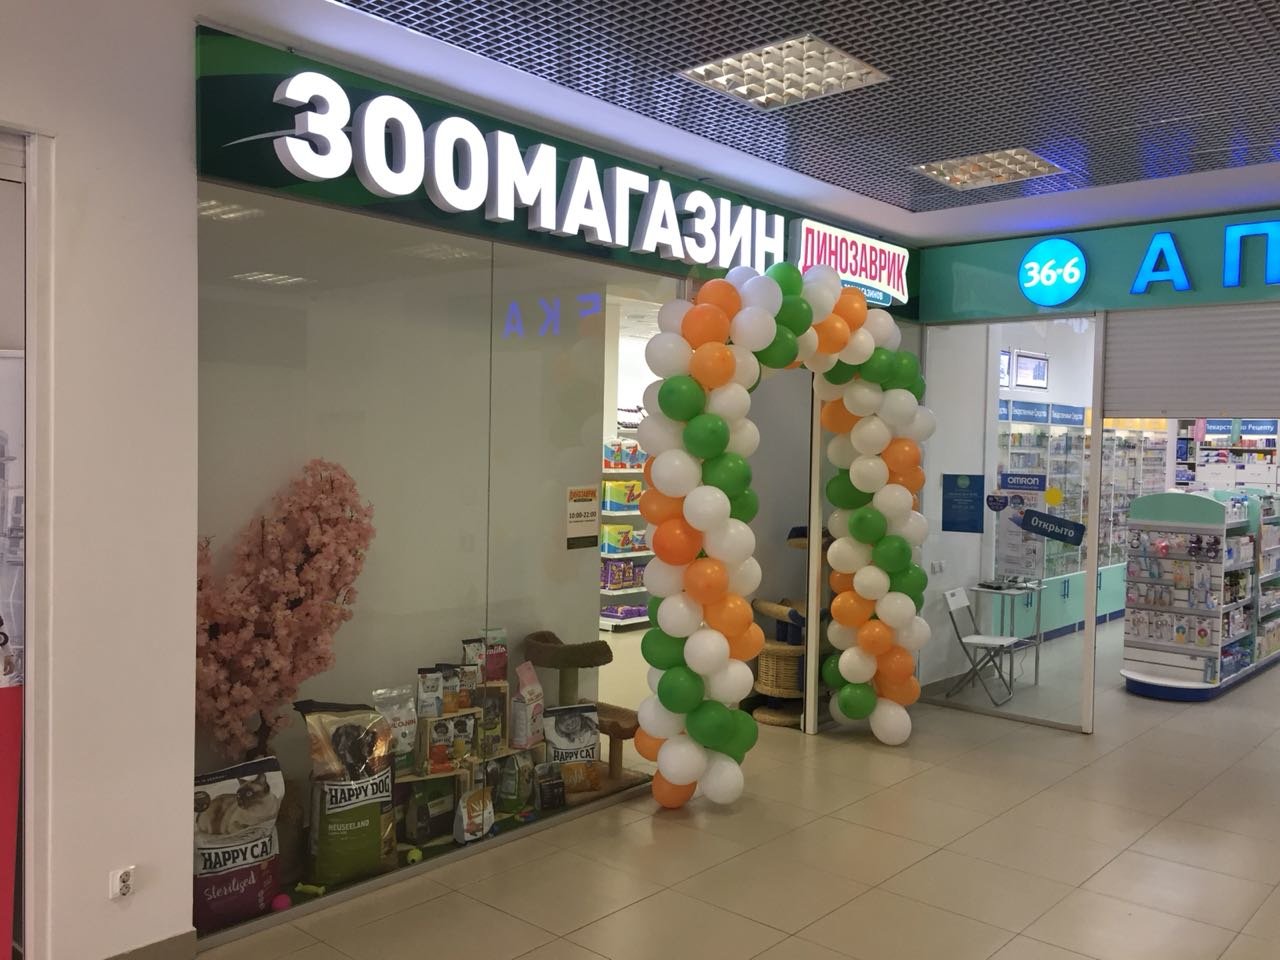 Зоомагазин Магазин Москва